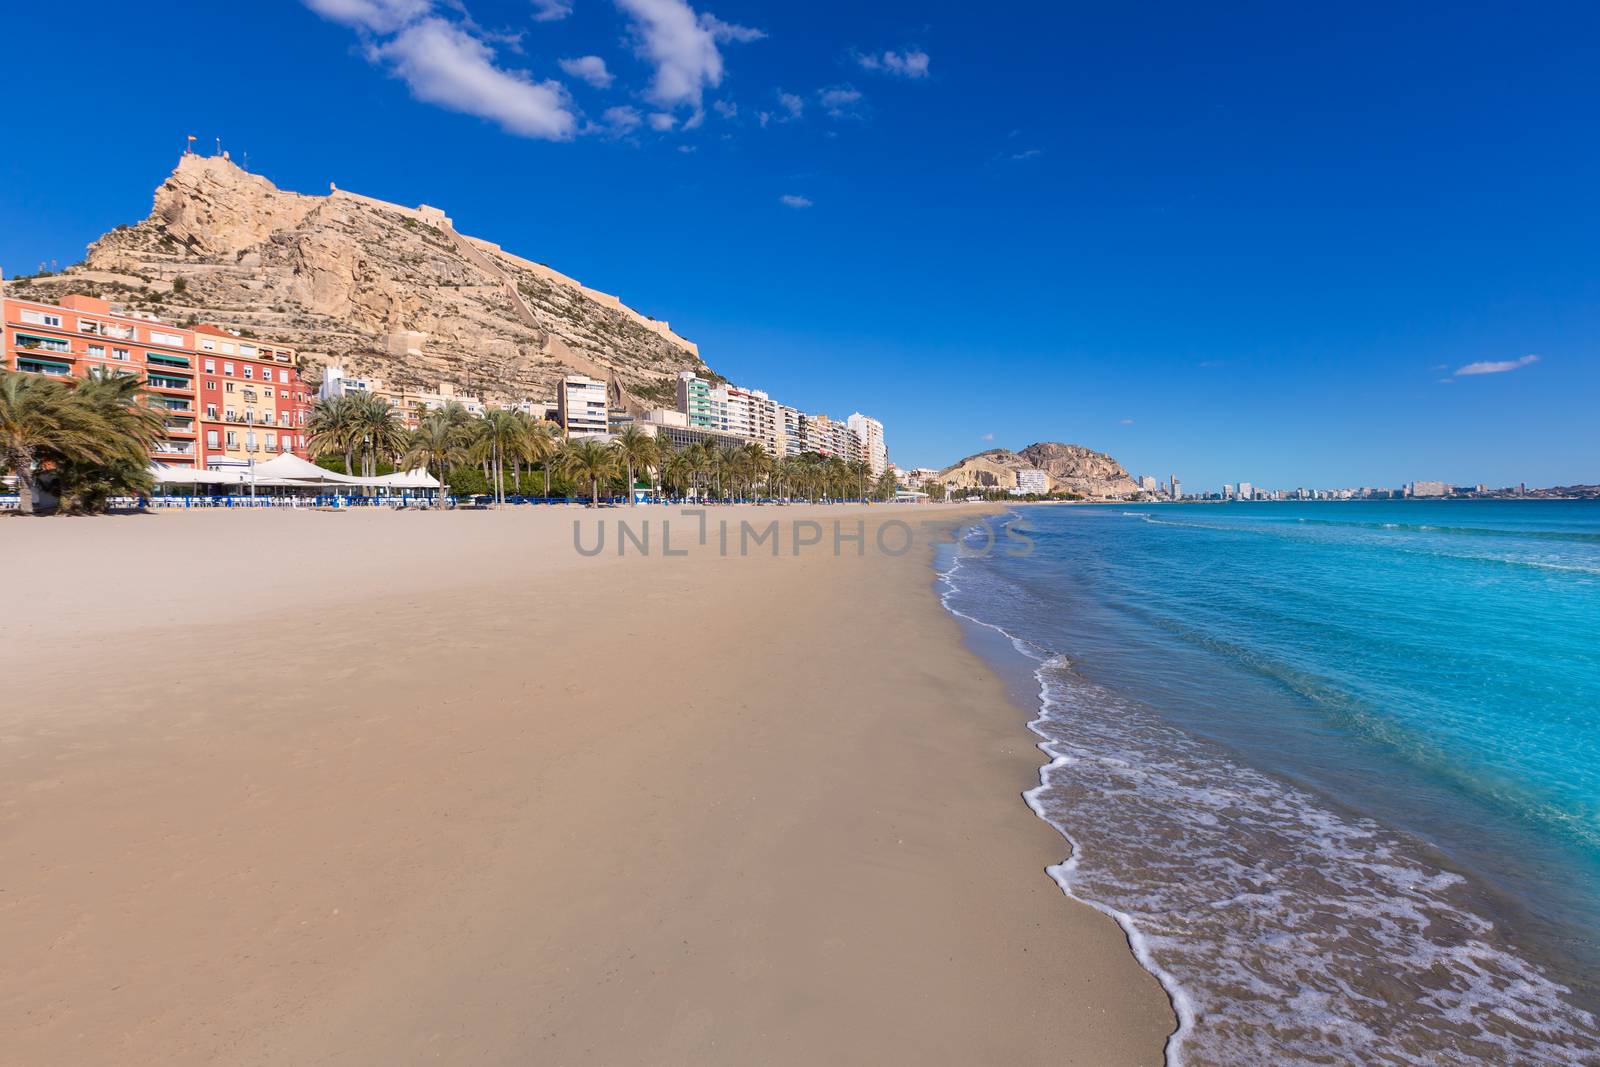 Alicante Postiguet beach and castle Santa Barbara in Spain by lunamarina